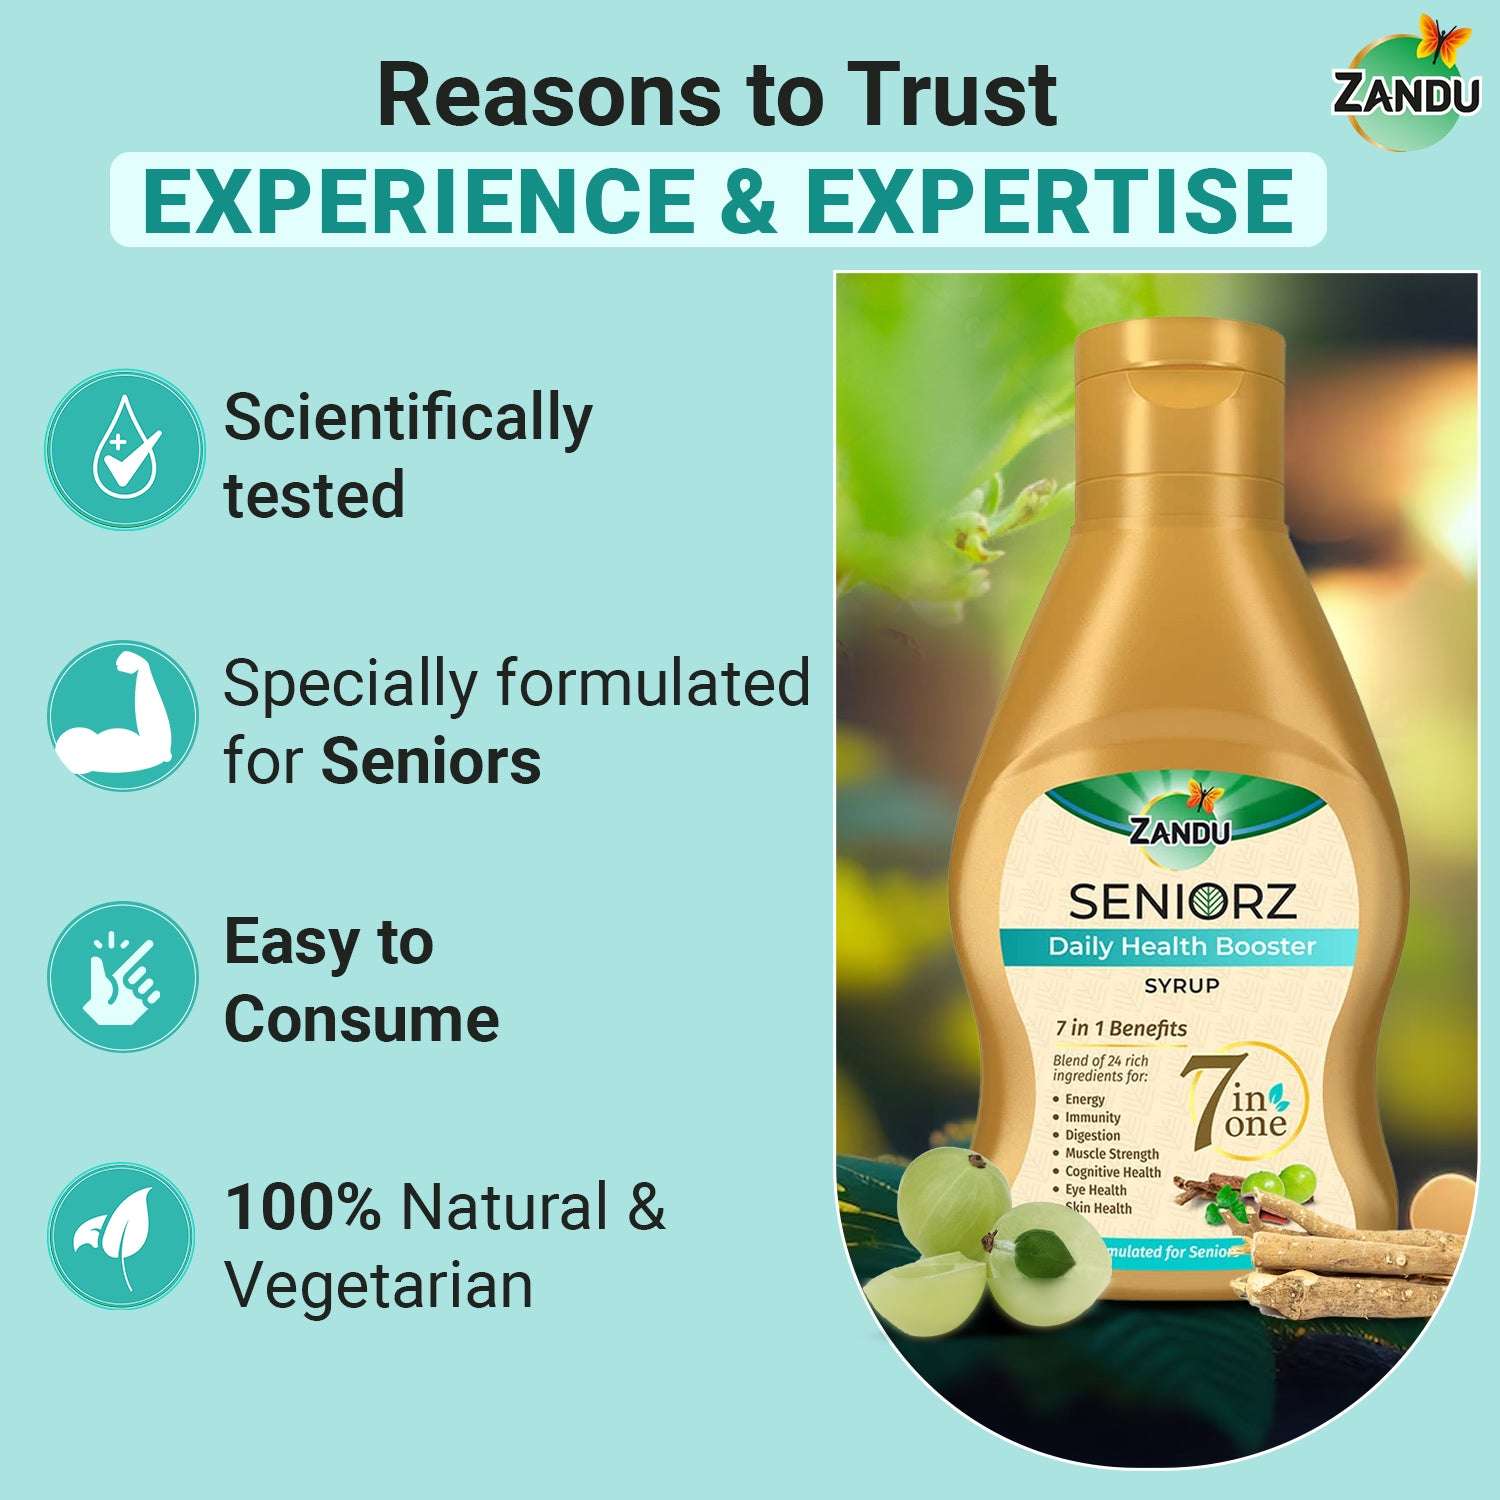 Why choose Zandu Seniorz Daily Health Booster Syrup?